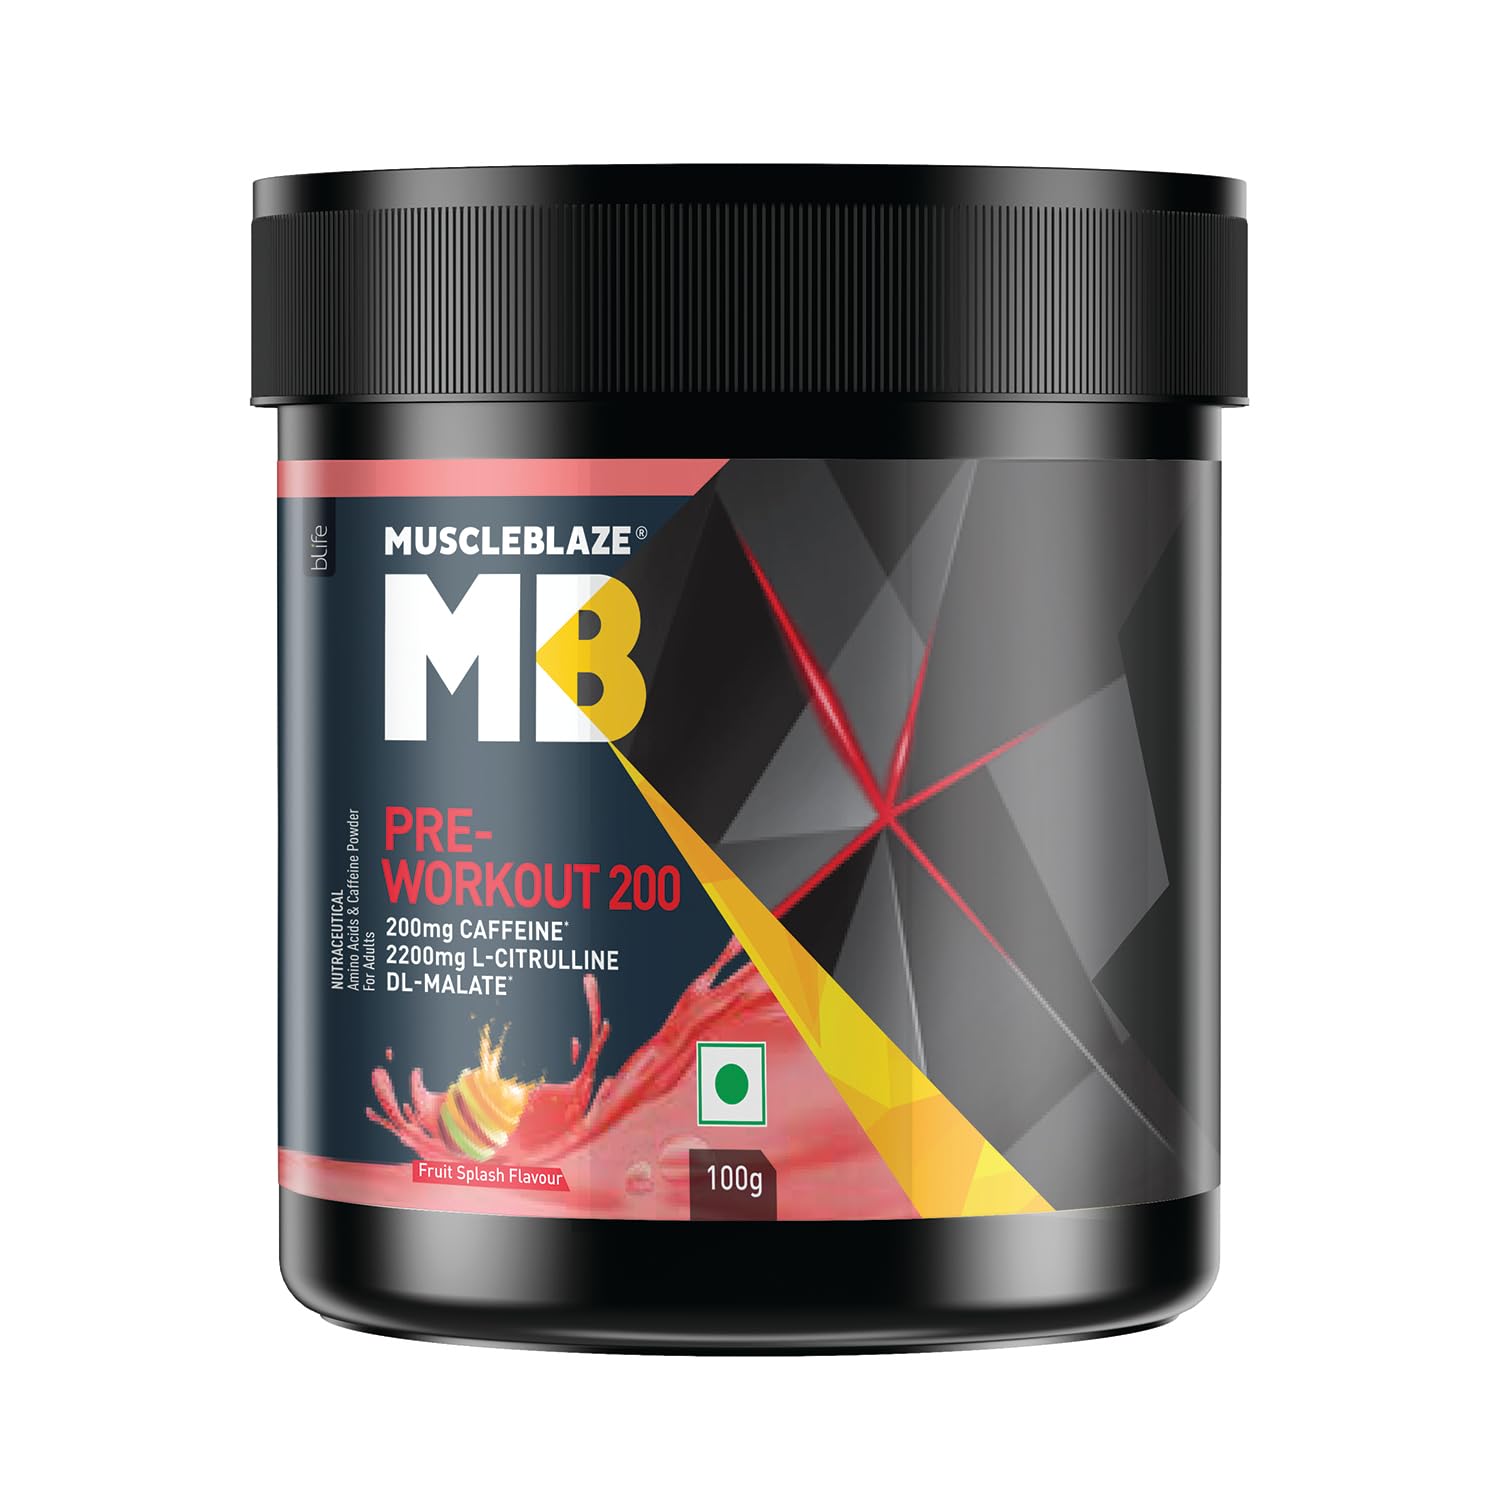 MuscleBlaze Pre Workout 200, 200mg Caffeine, 2200mg Citrulline (Fruit Splash, 100g Powder, 20 servings)